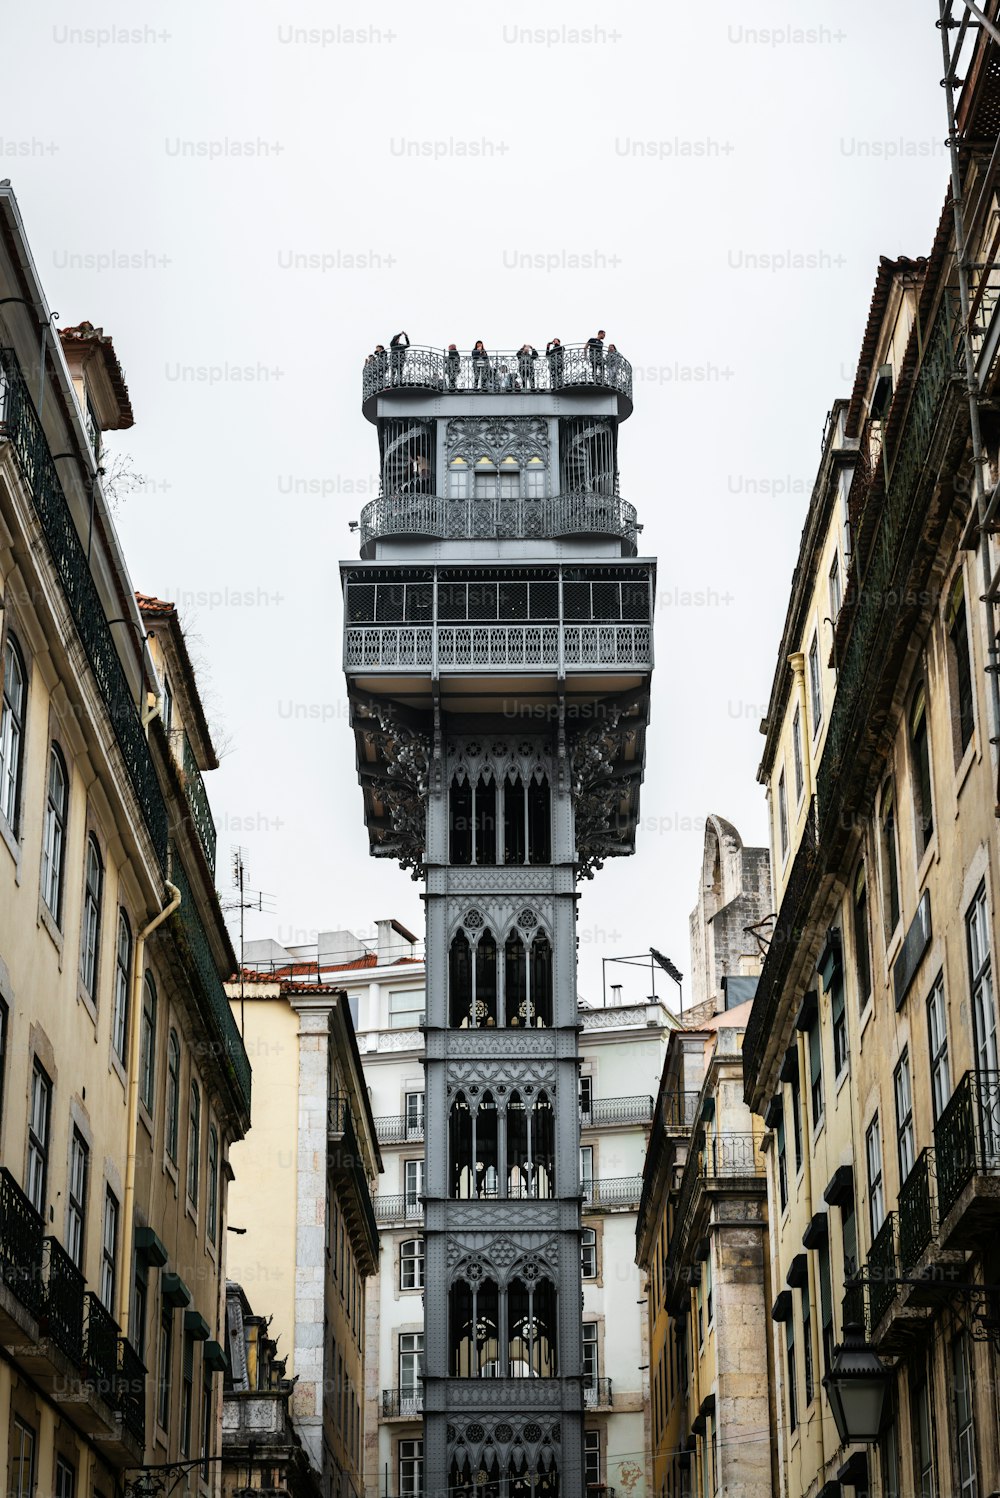 Elevador de Sant Justa(サンタ・フスタ・リフト)は、リスボンのバイシャの狭い通りから見たものです。